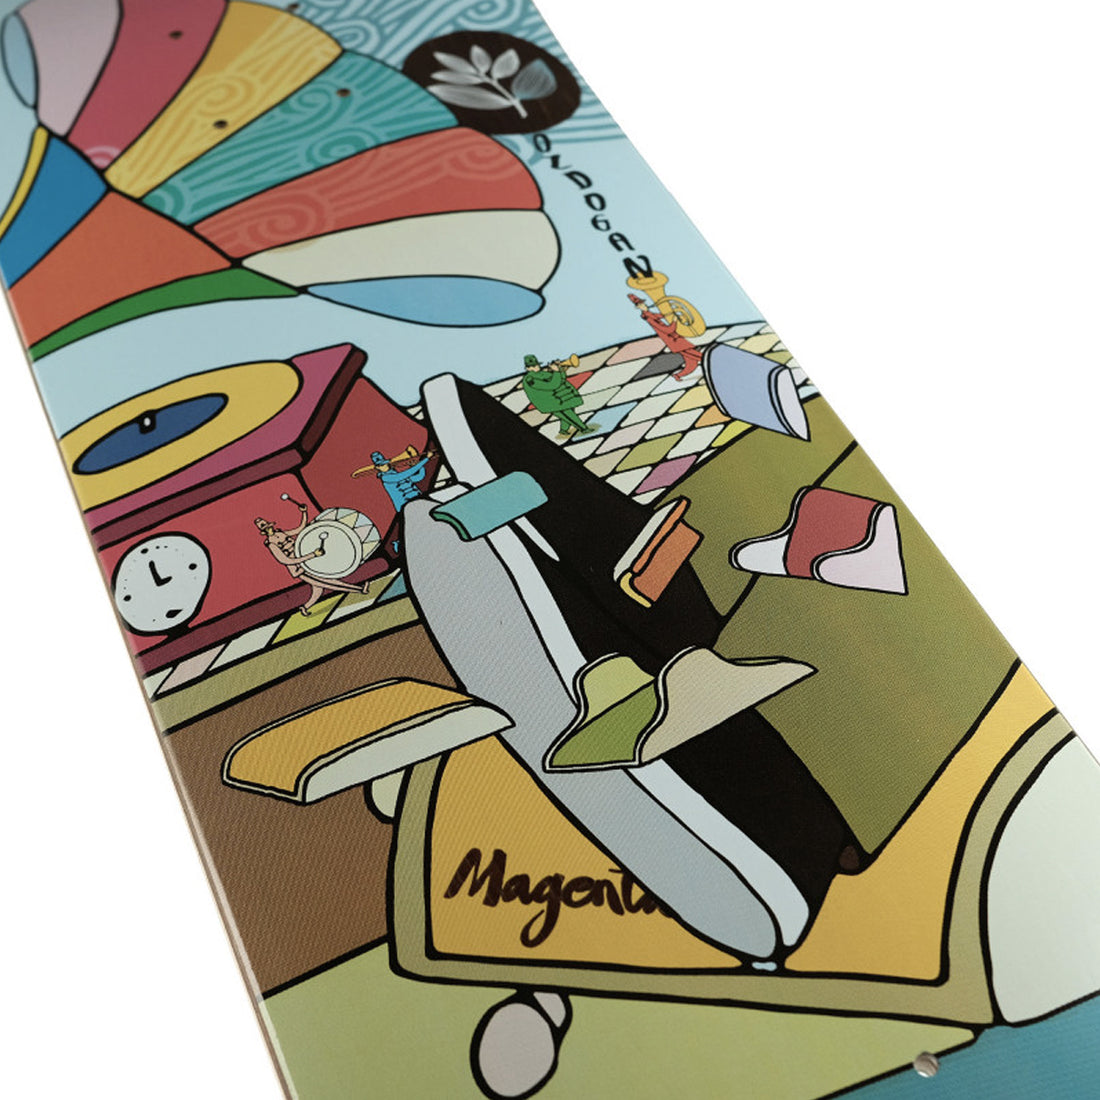 Magenta Gunes Ozdogan Lucid Dream 8.25" Skateboard Deck